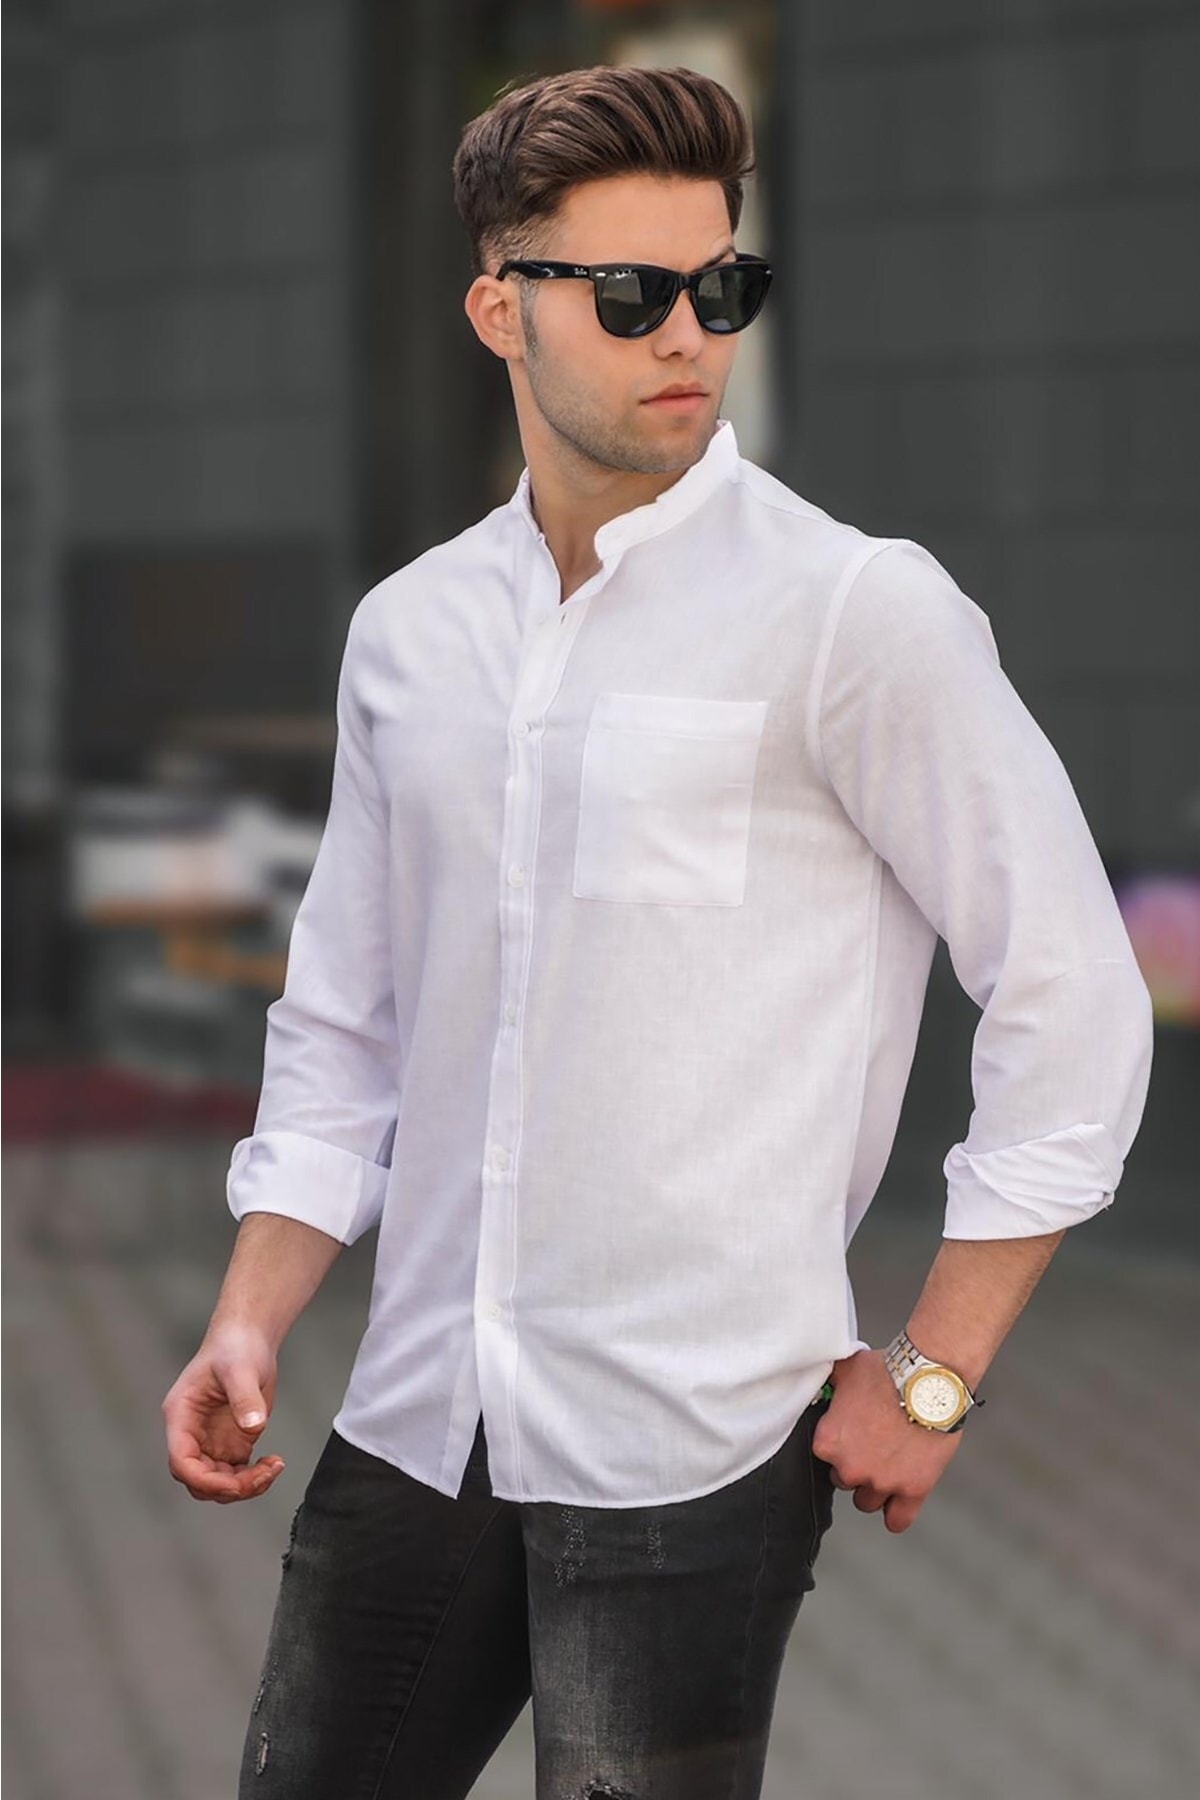 Madmext Men's White Plain Long Sleeve Shirt 5548